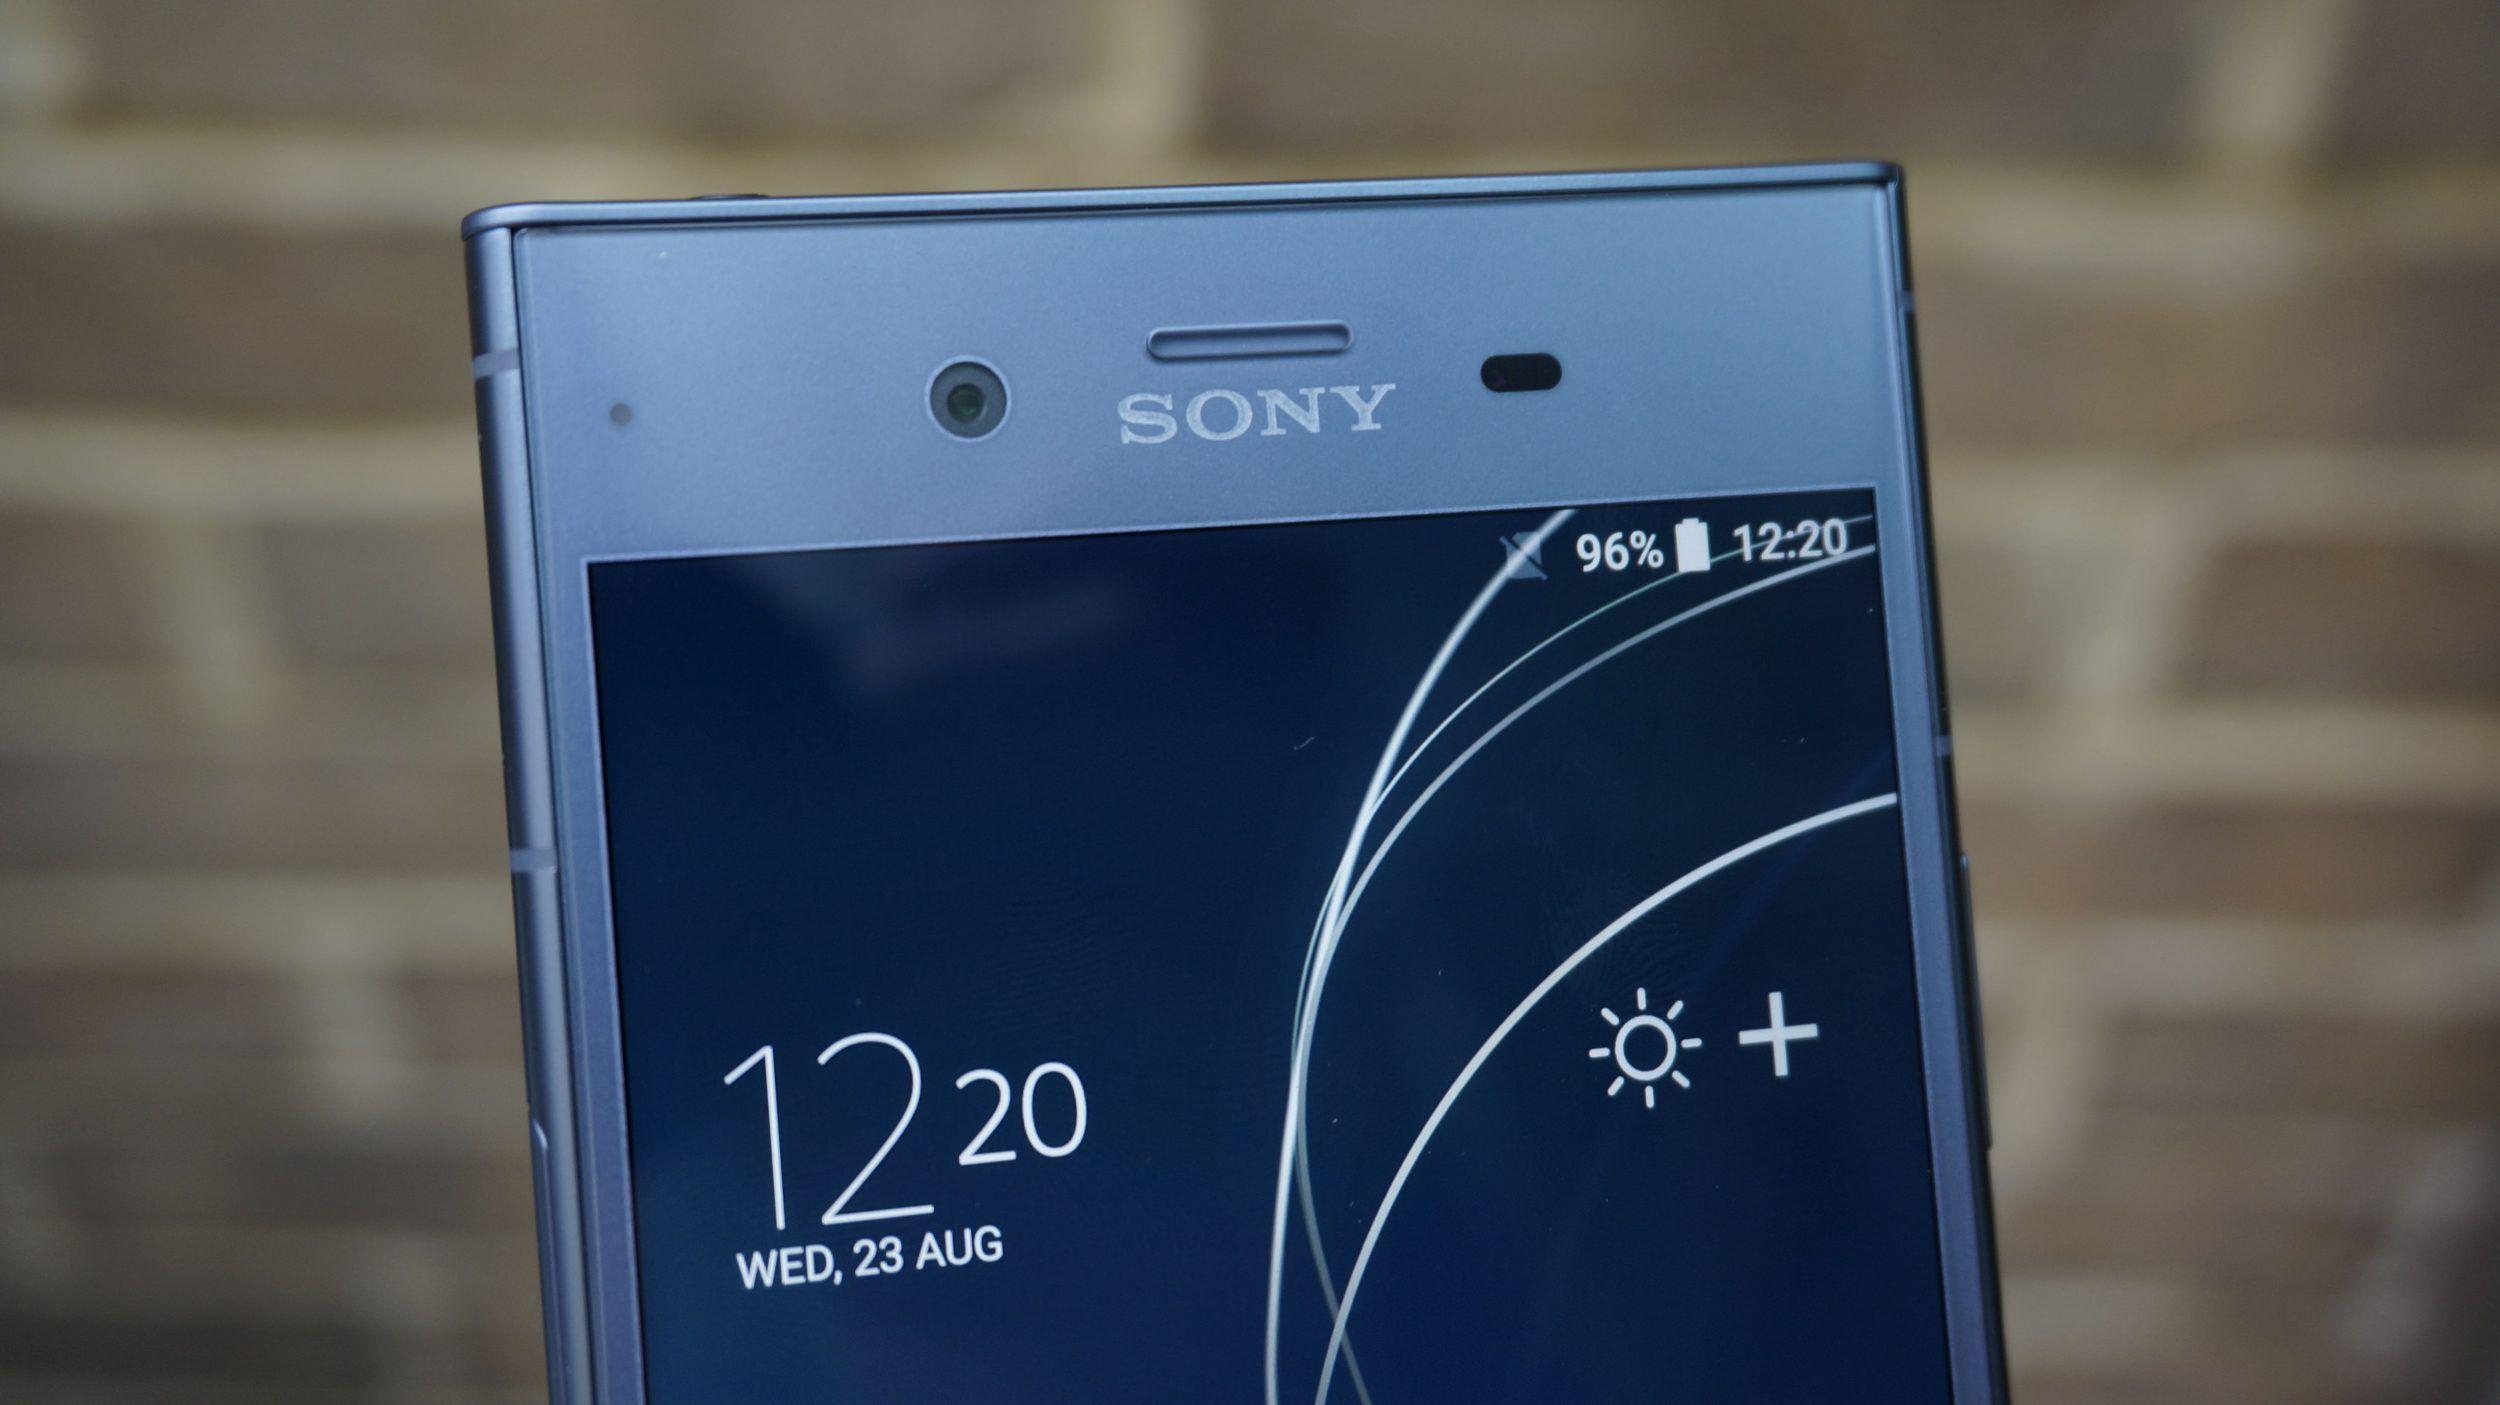 Sony Xperia XZ1 ;A Premium Phone!